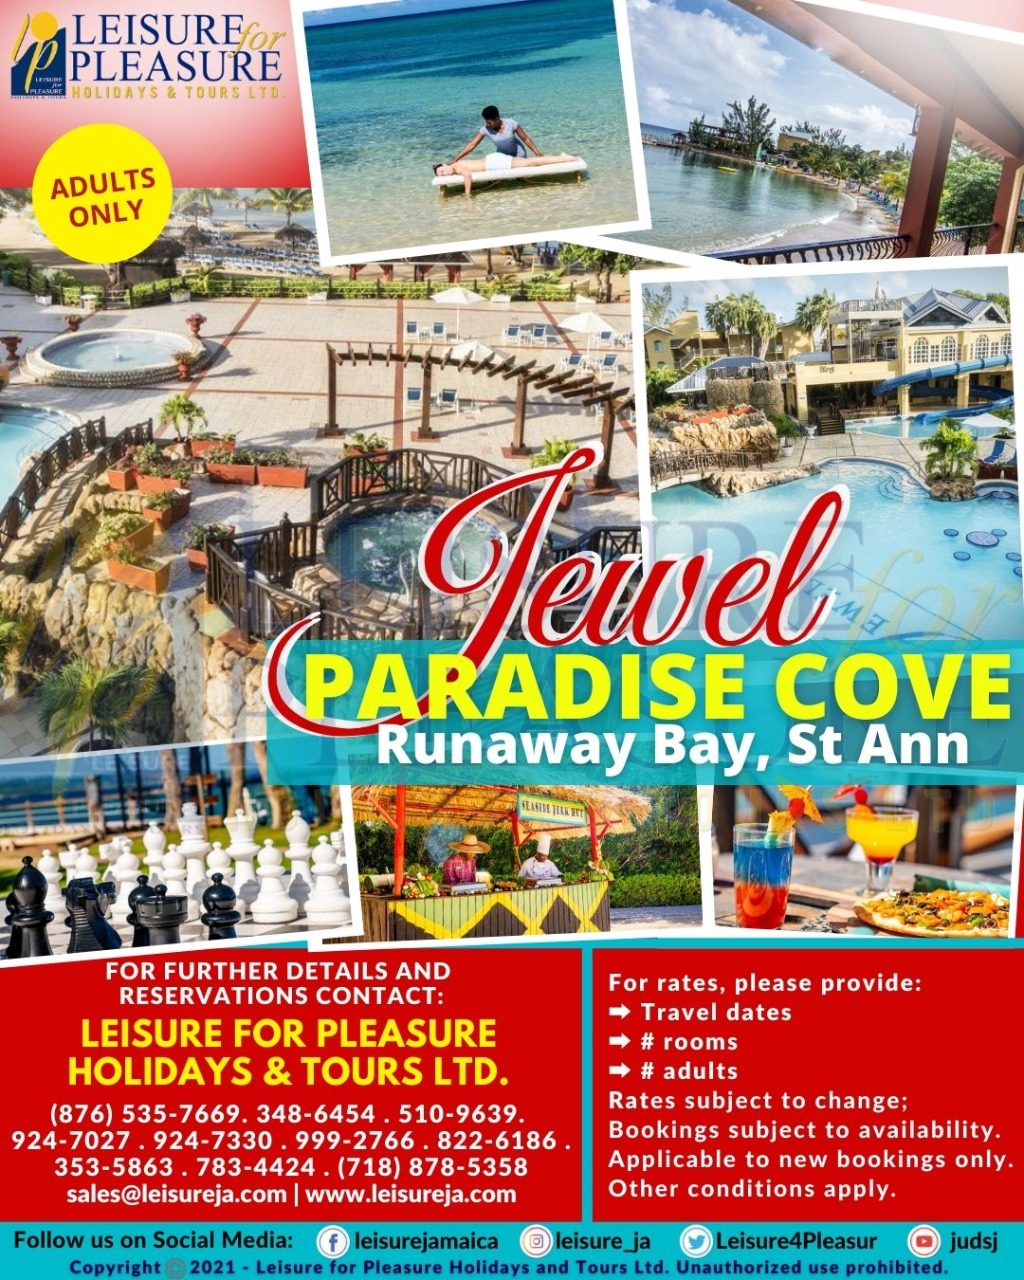 Jewel Paradise Cove - Runaway Bay. St Ann